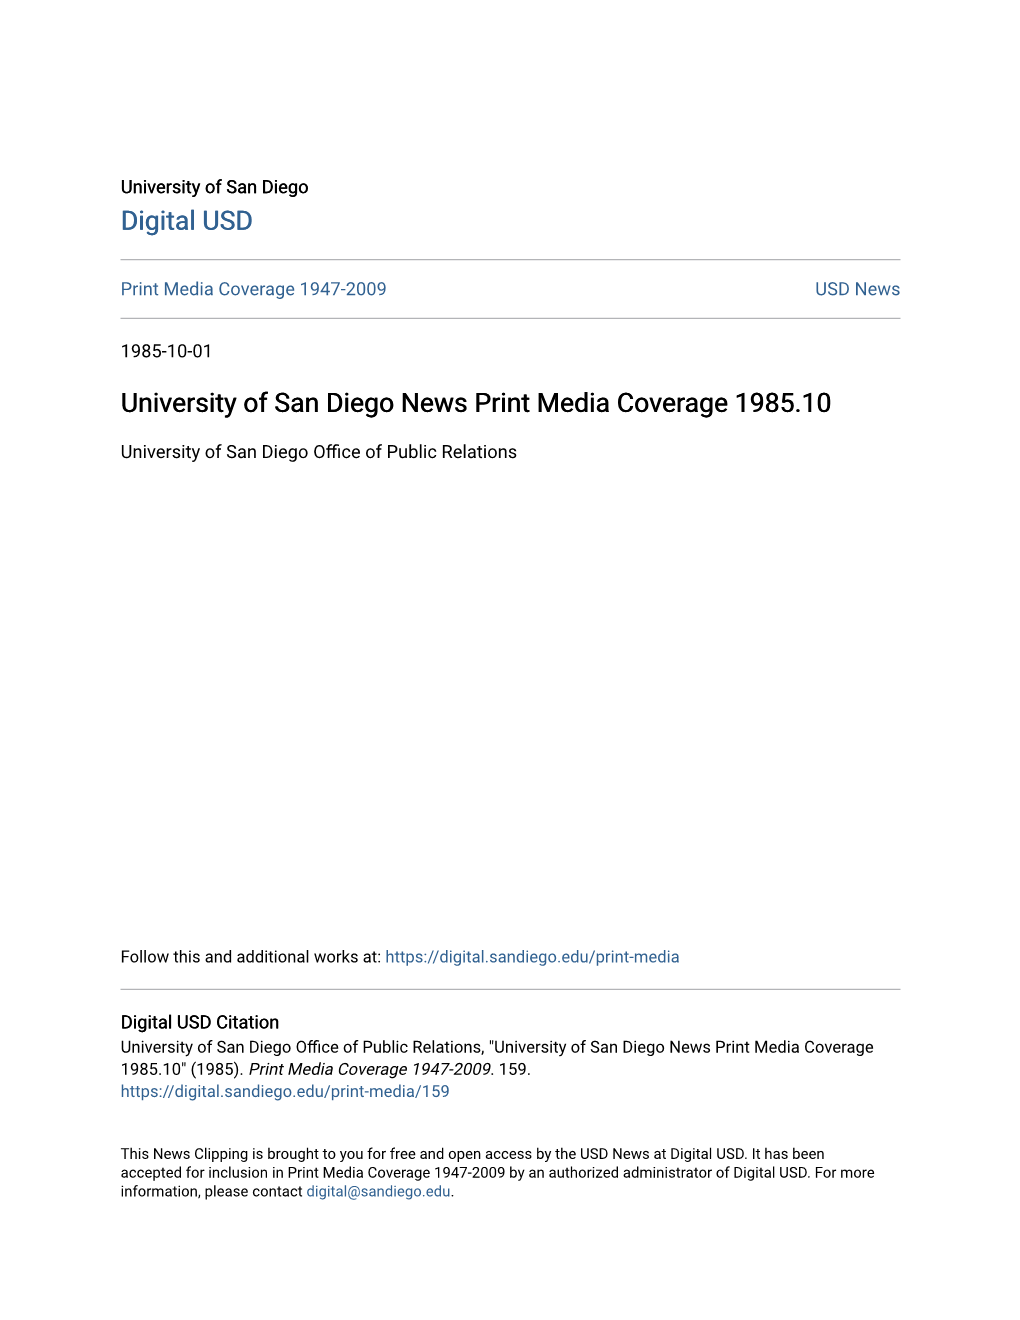 University of San Diego News Print Media Coverage 1985.10